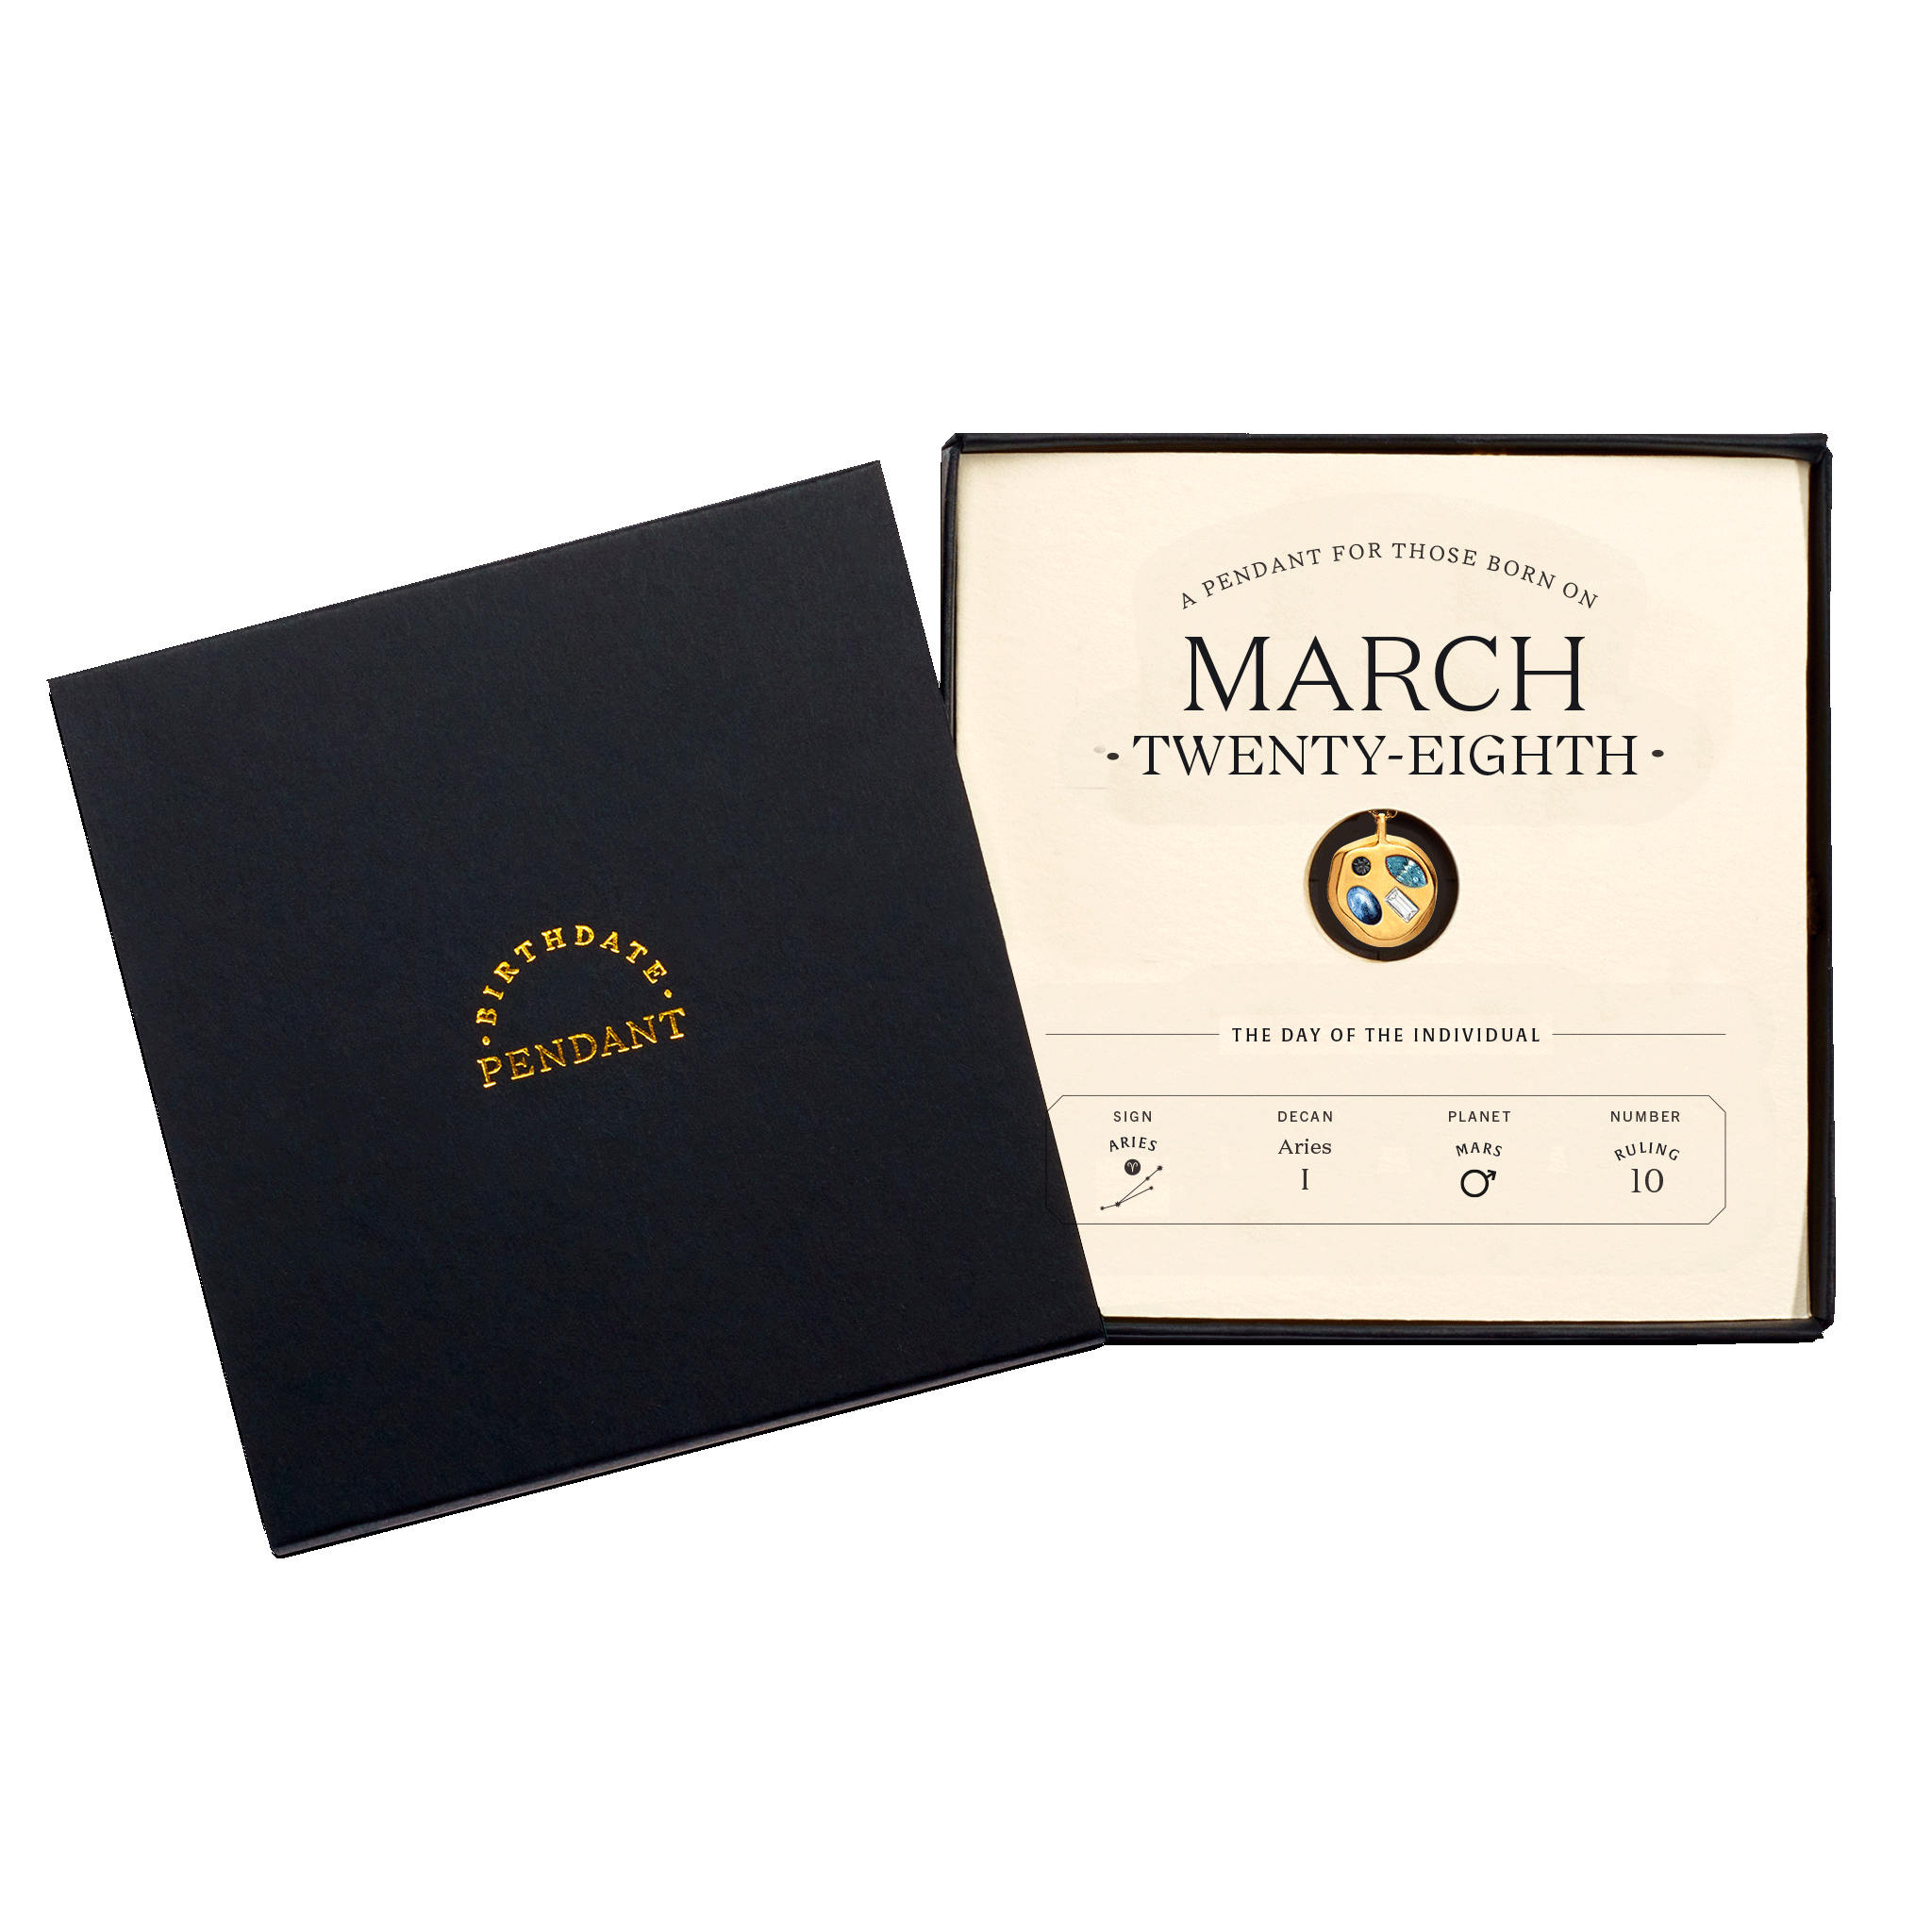 The March Twenty-Eighth Pendant inside its box